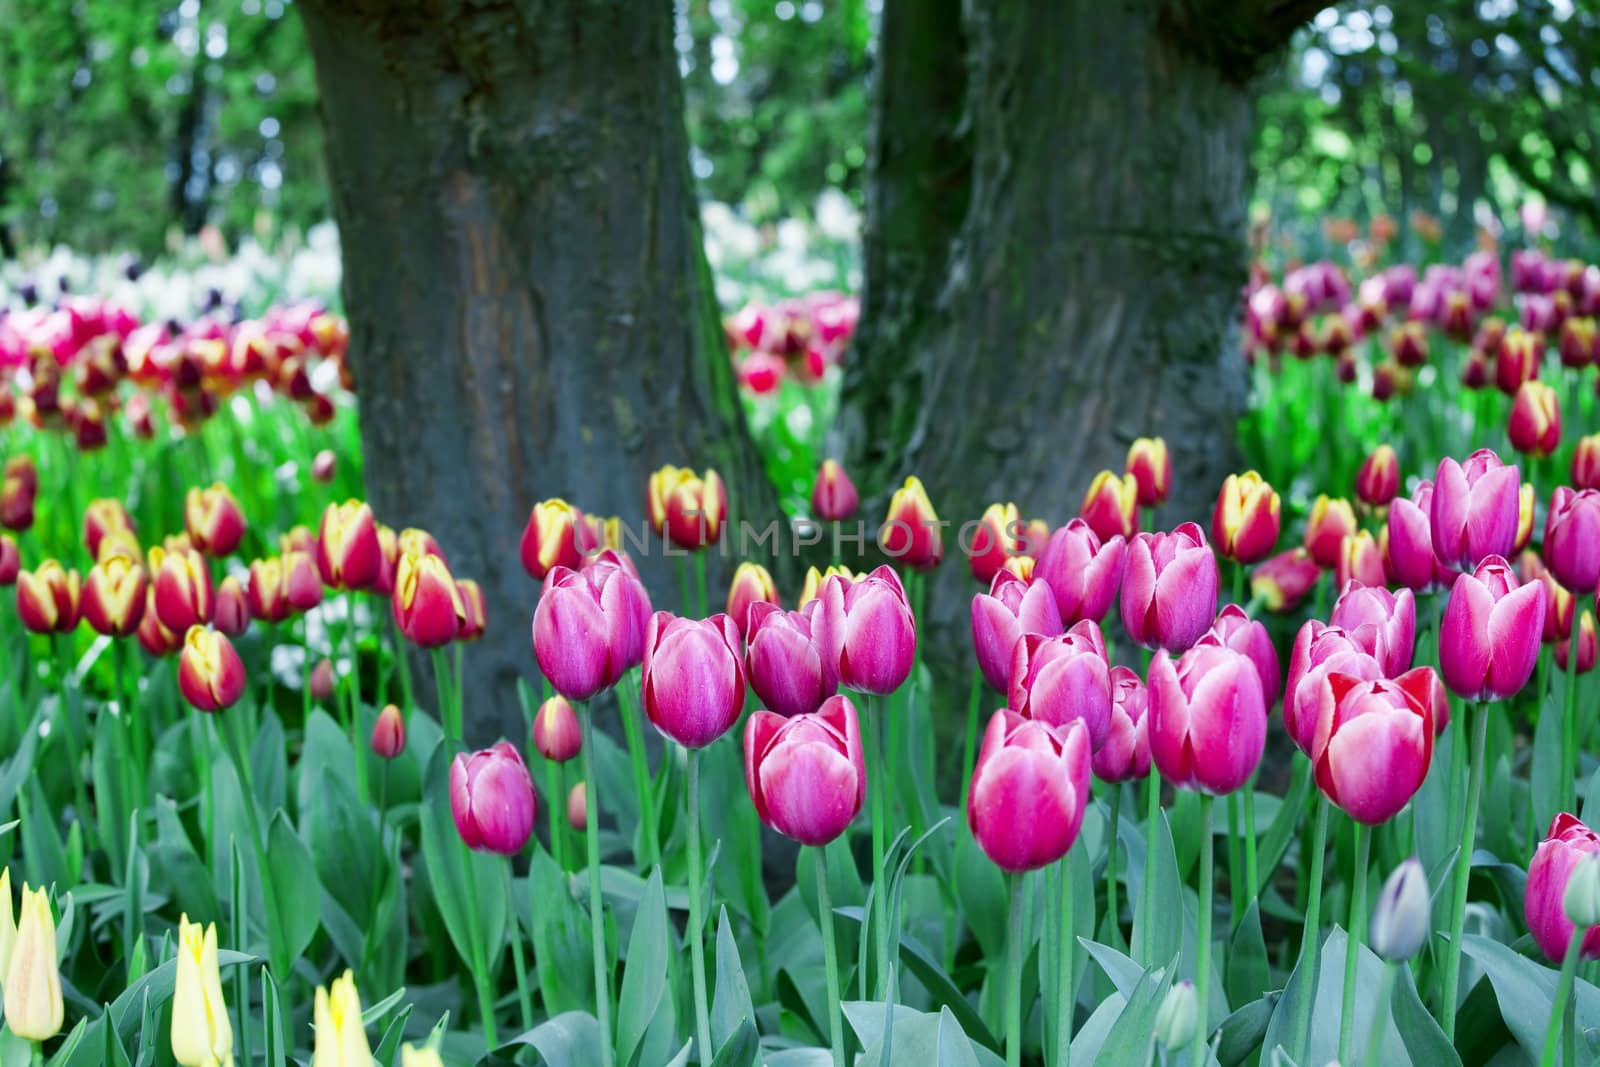 Colorful sea of beautiful tulips in full bloom by jarenwicklund